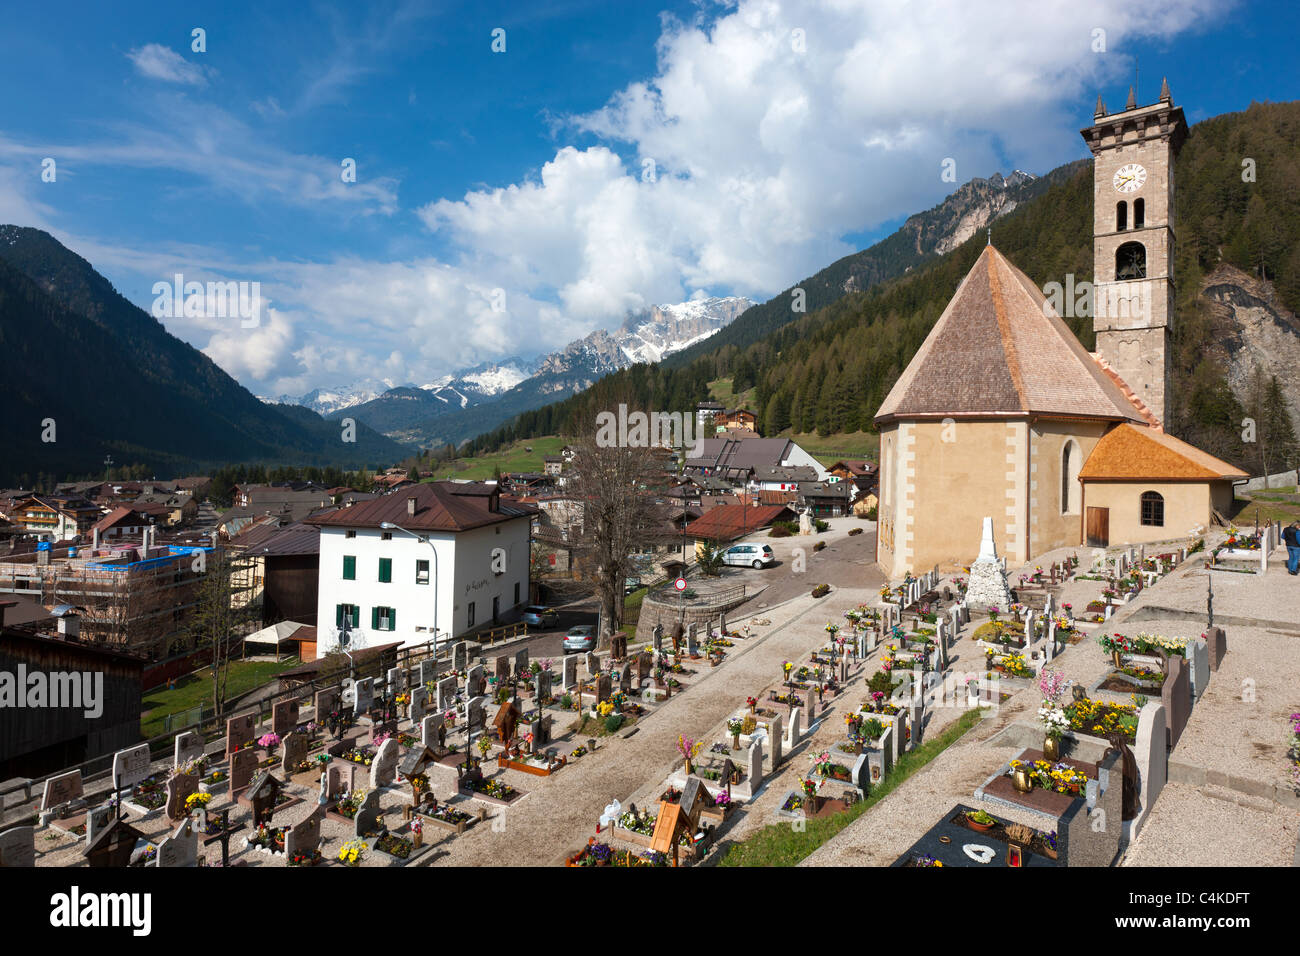 Parish Church Dedicated To St. Philip And St. James, Campitello di Fassa, Dolomites, Trentino-Alto Adige, Italy, Europe Stock Photo